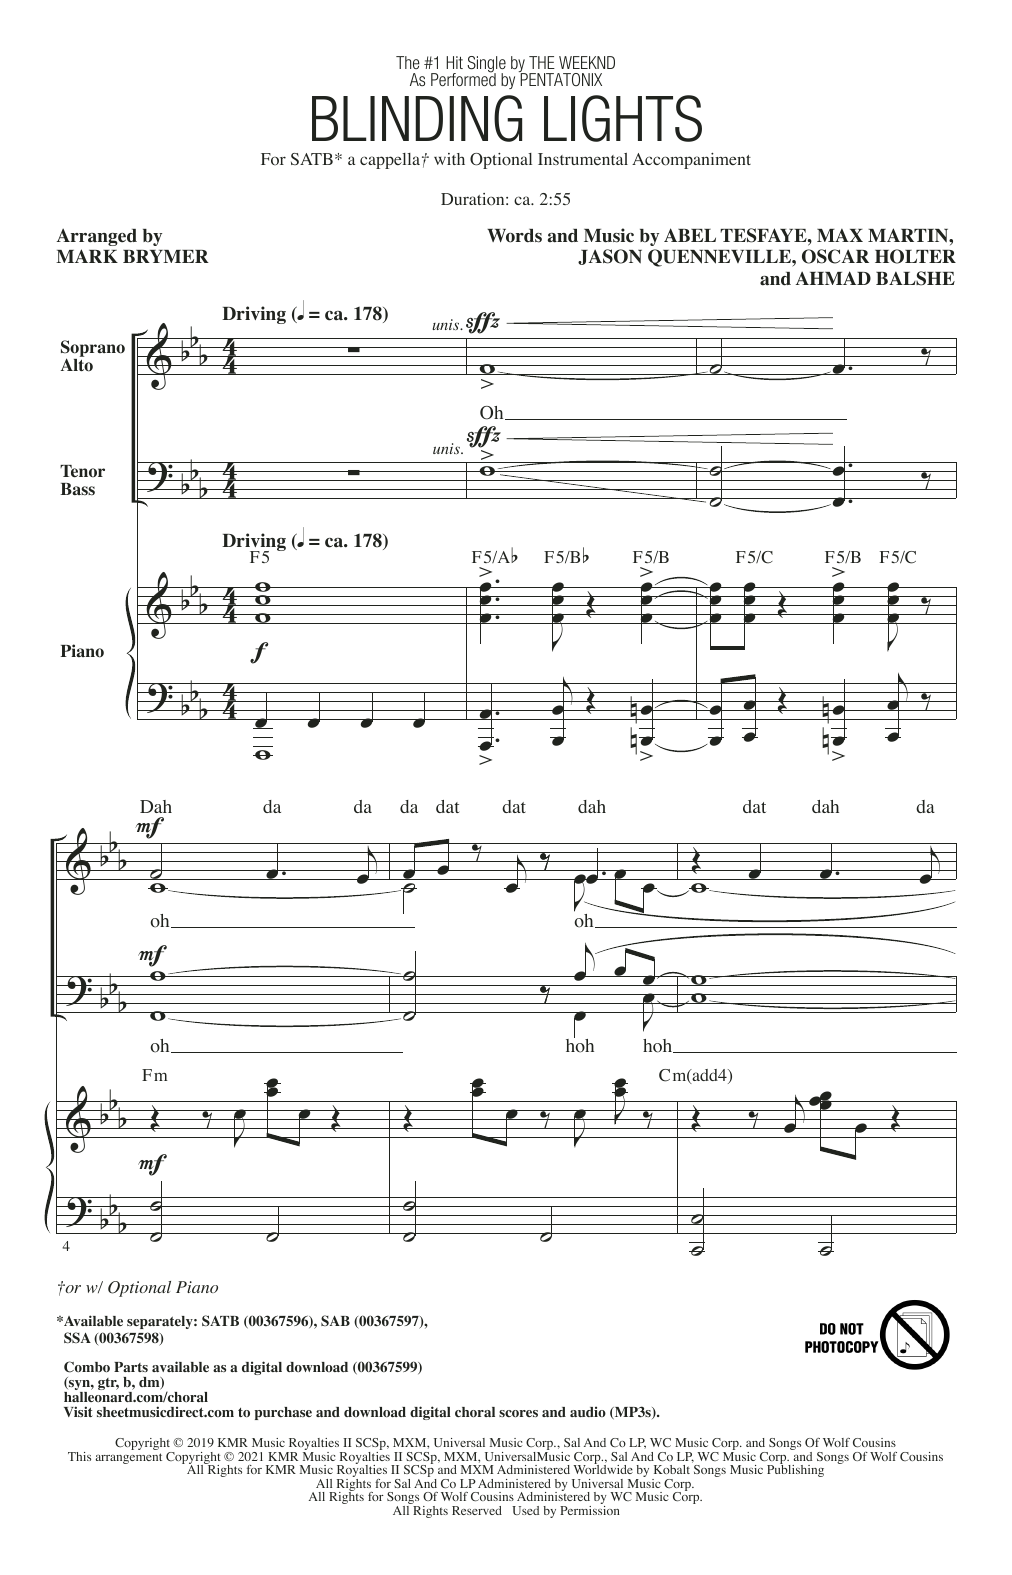 Pentatonix Blinding Lights (arr. Mark Brymer) Sheet Music Notes & Chords for SATB Choir - Download or Print PDF